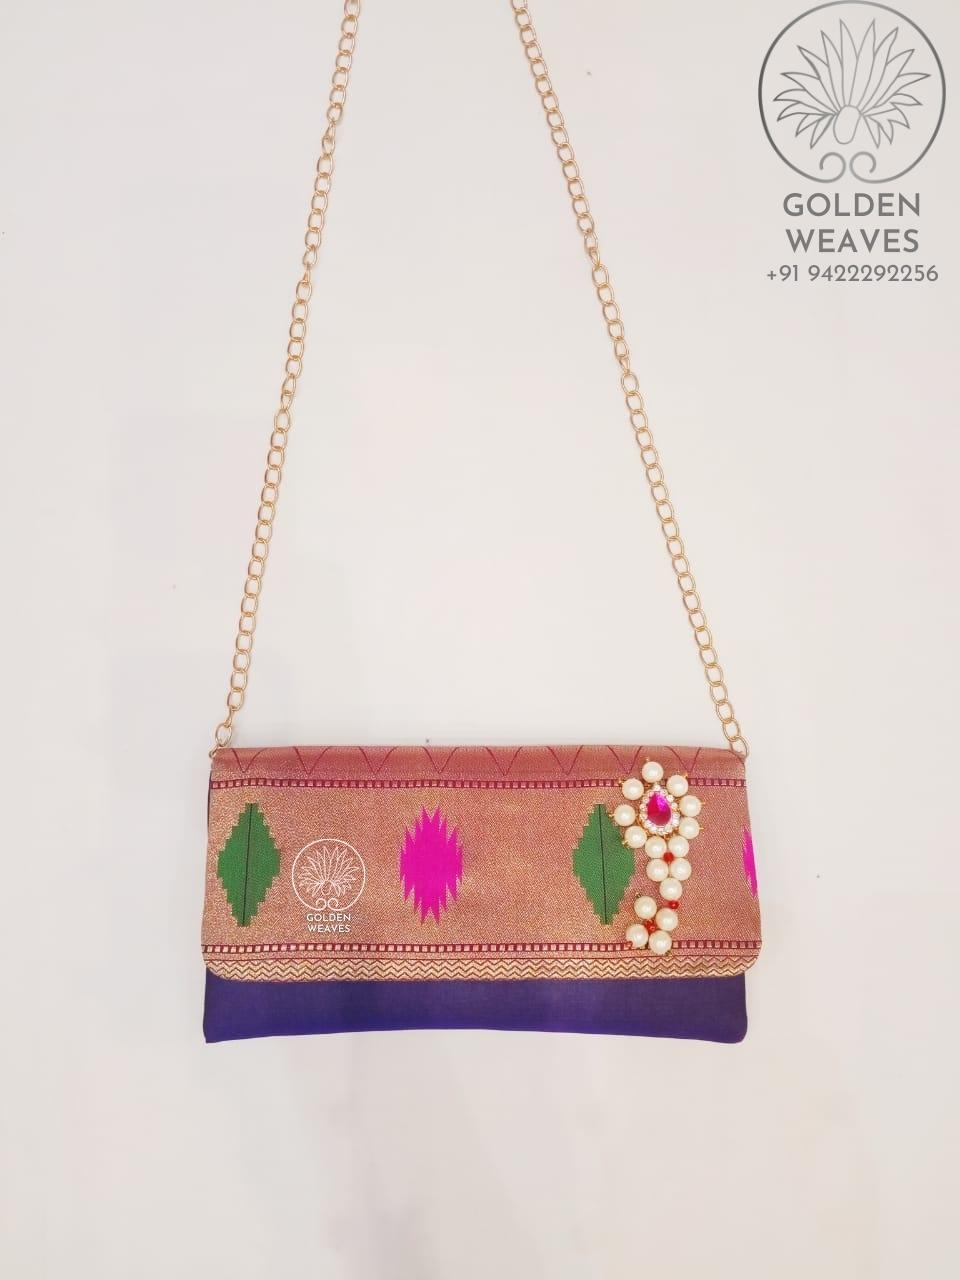 Latest Ladies Hand Bags design 2020 / Girls Stylish Purse & Handbags  Collection #handbag #handbags | Bags, Small shoulder bag, Hand purse design